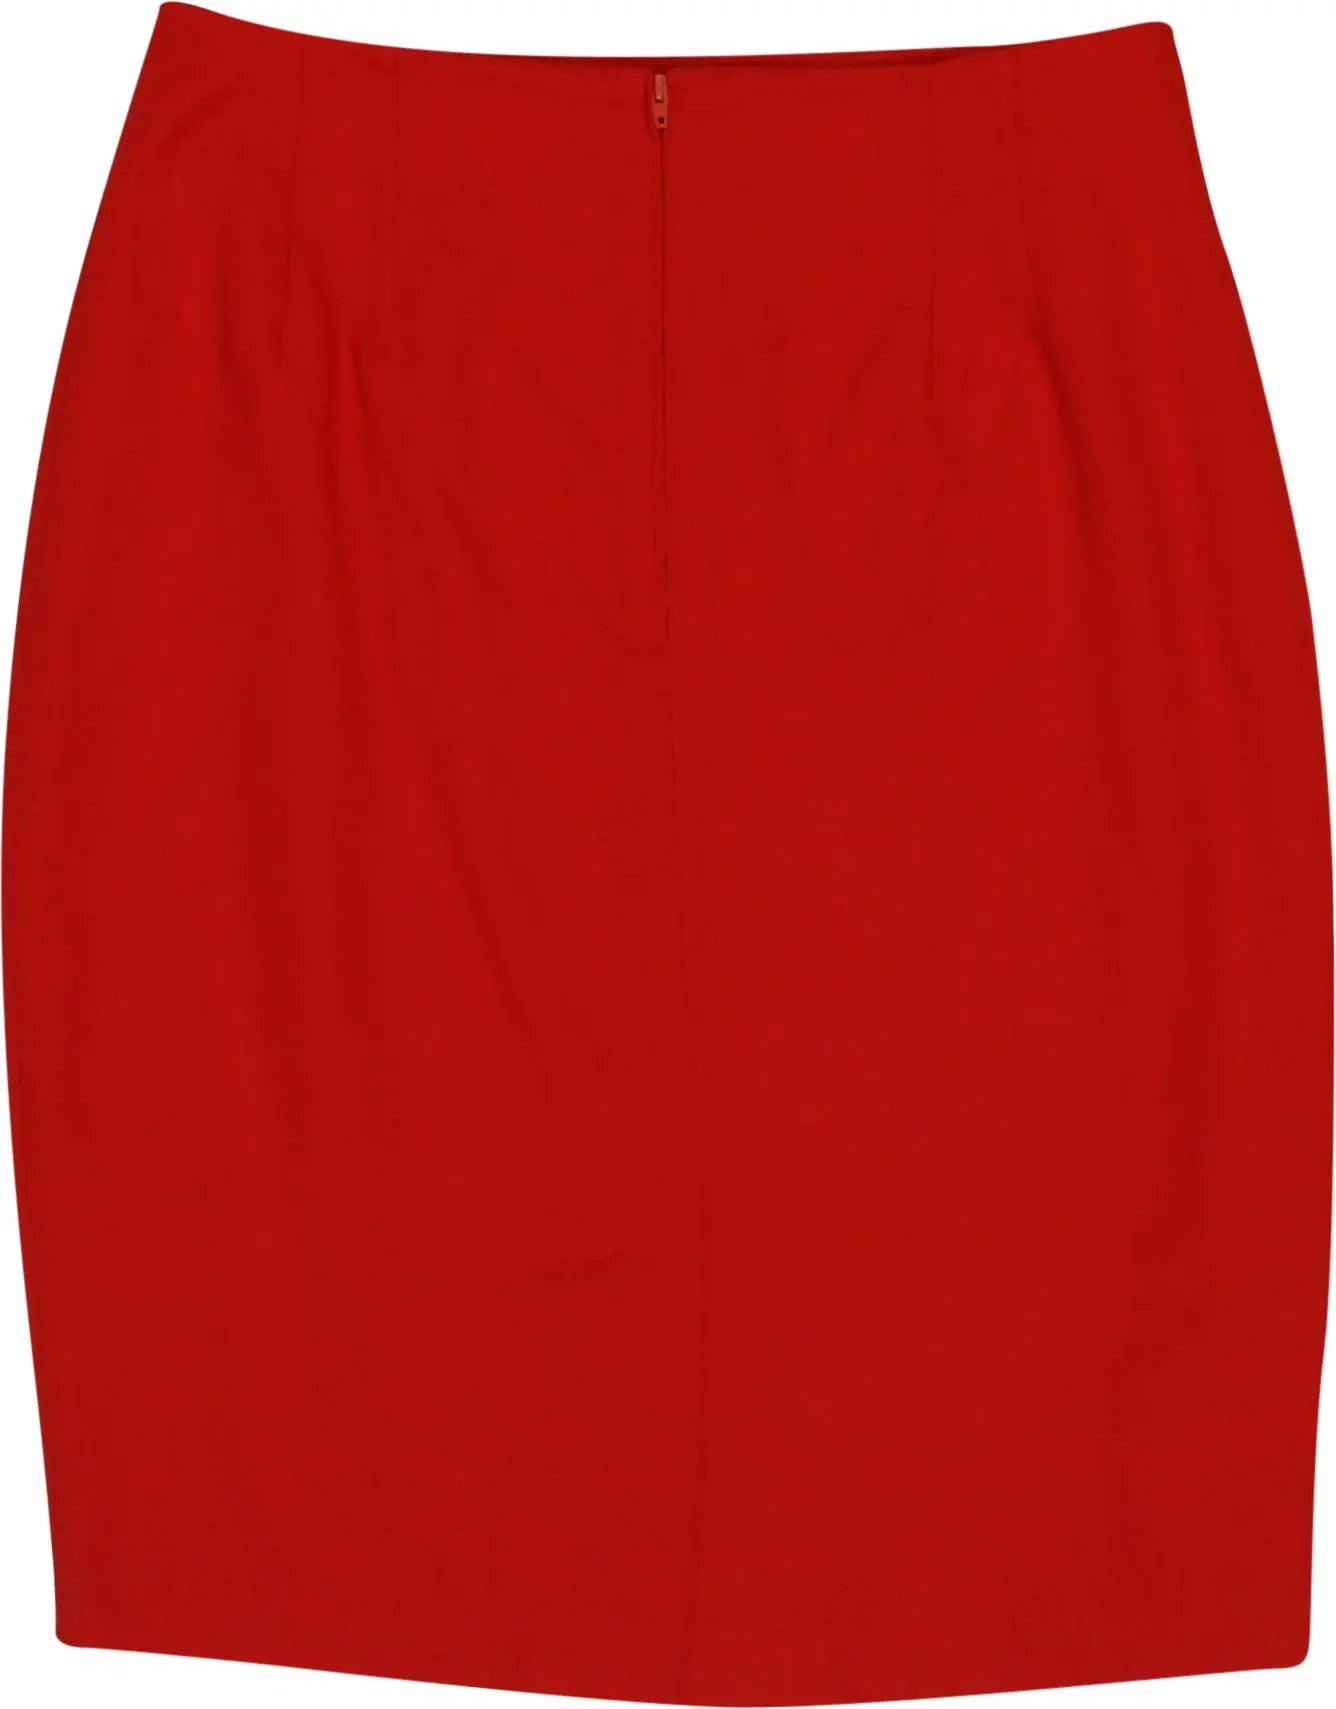 Handmade - Handmade Short Skirt- ThriftTale.com - Vintage and second handclothing